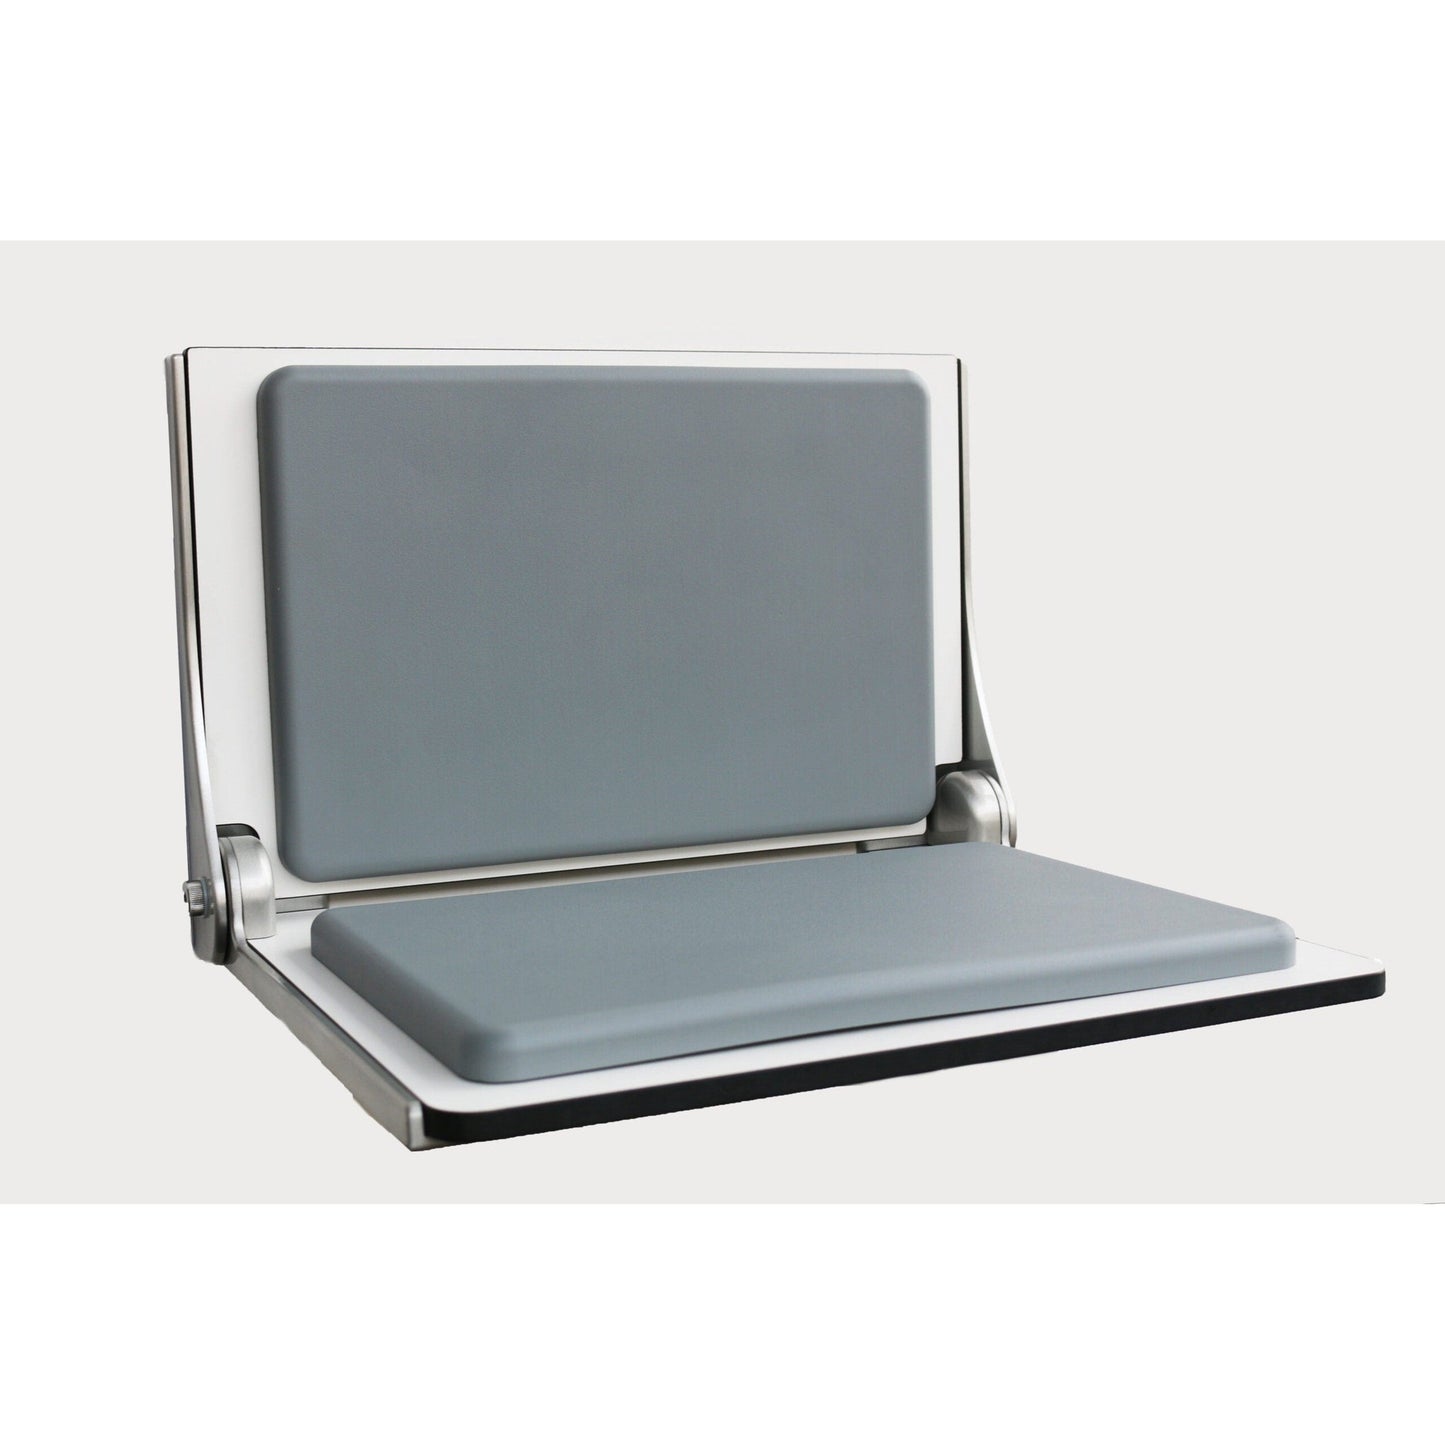 Seachrome Lifestyle & Wellness 19" W x 12" D Silver Polyurethane Closed Cell Foam Silhouette Seat Pad